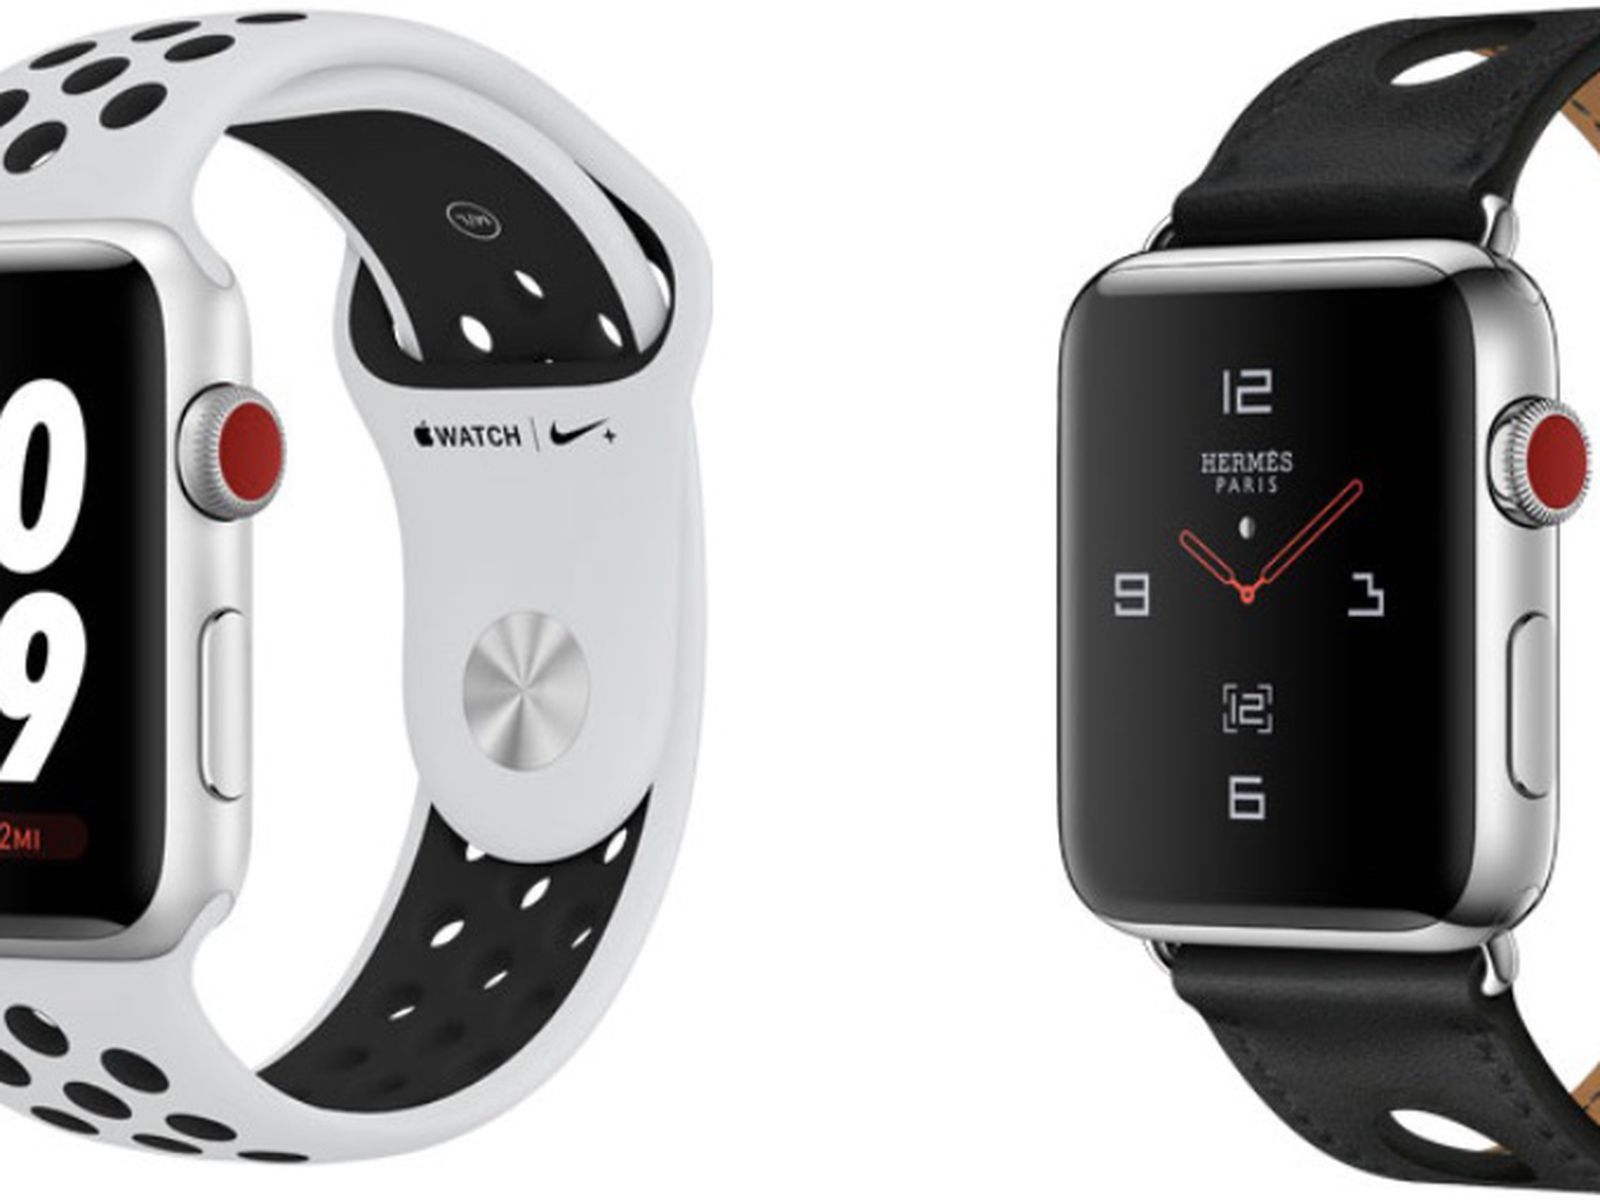 Вотч 3 найк. Apple watch 3 42 mm. Эпл вотч 1. Apple watch Series 4 Nike+ 42. Ультра Эрмес эпл вотч.